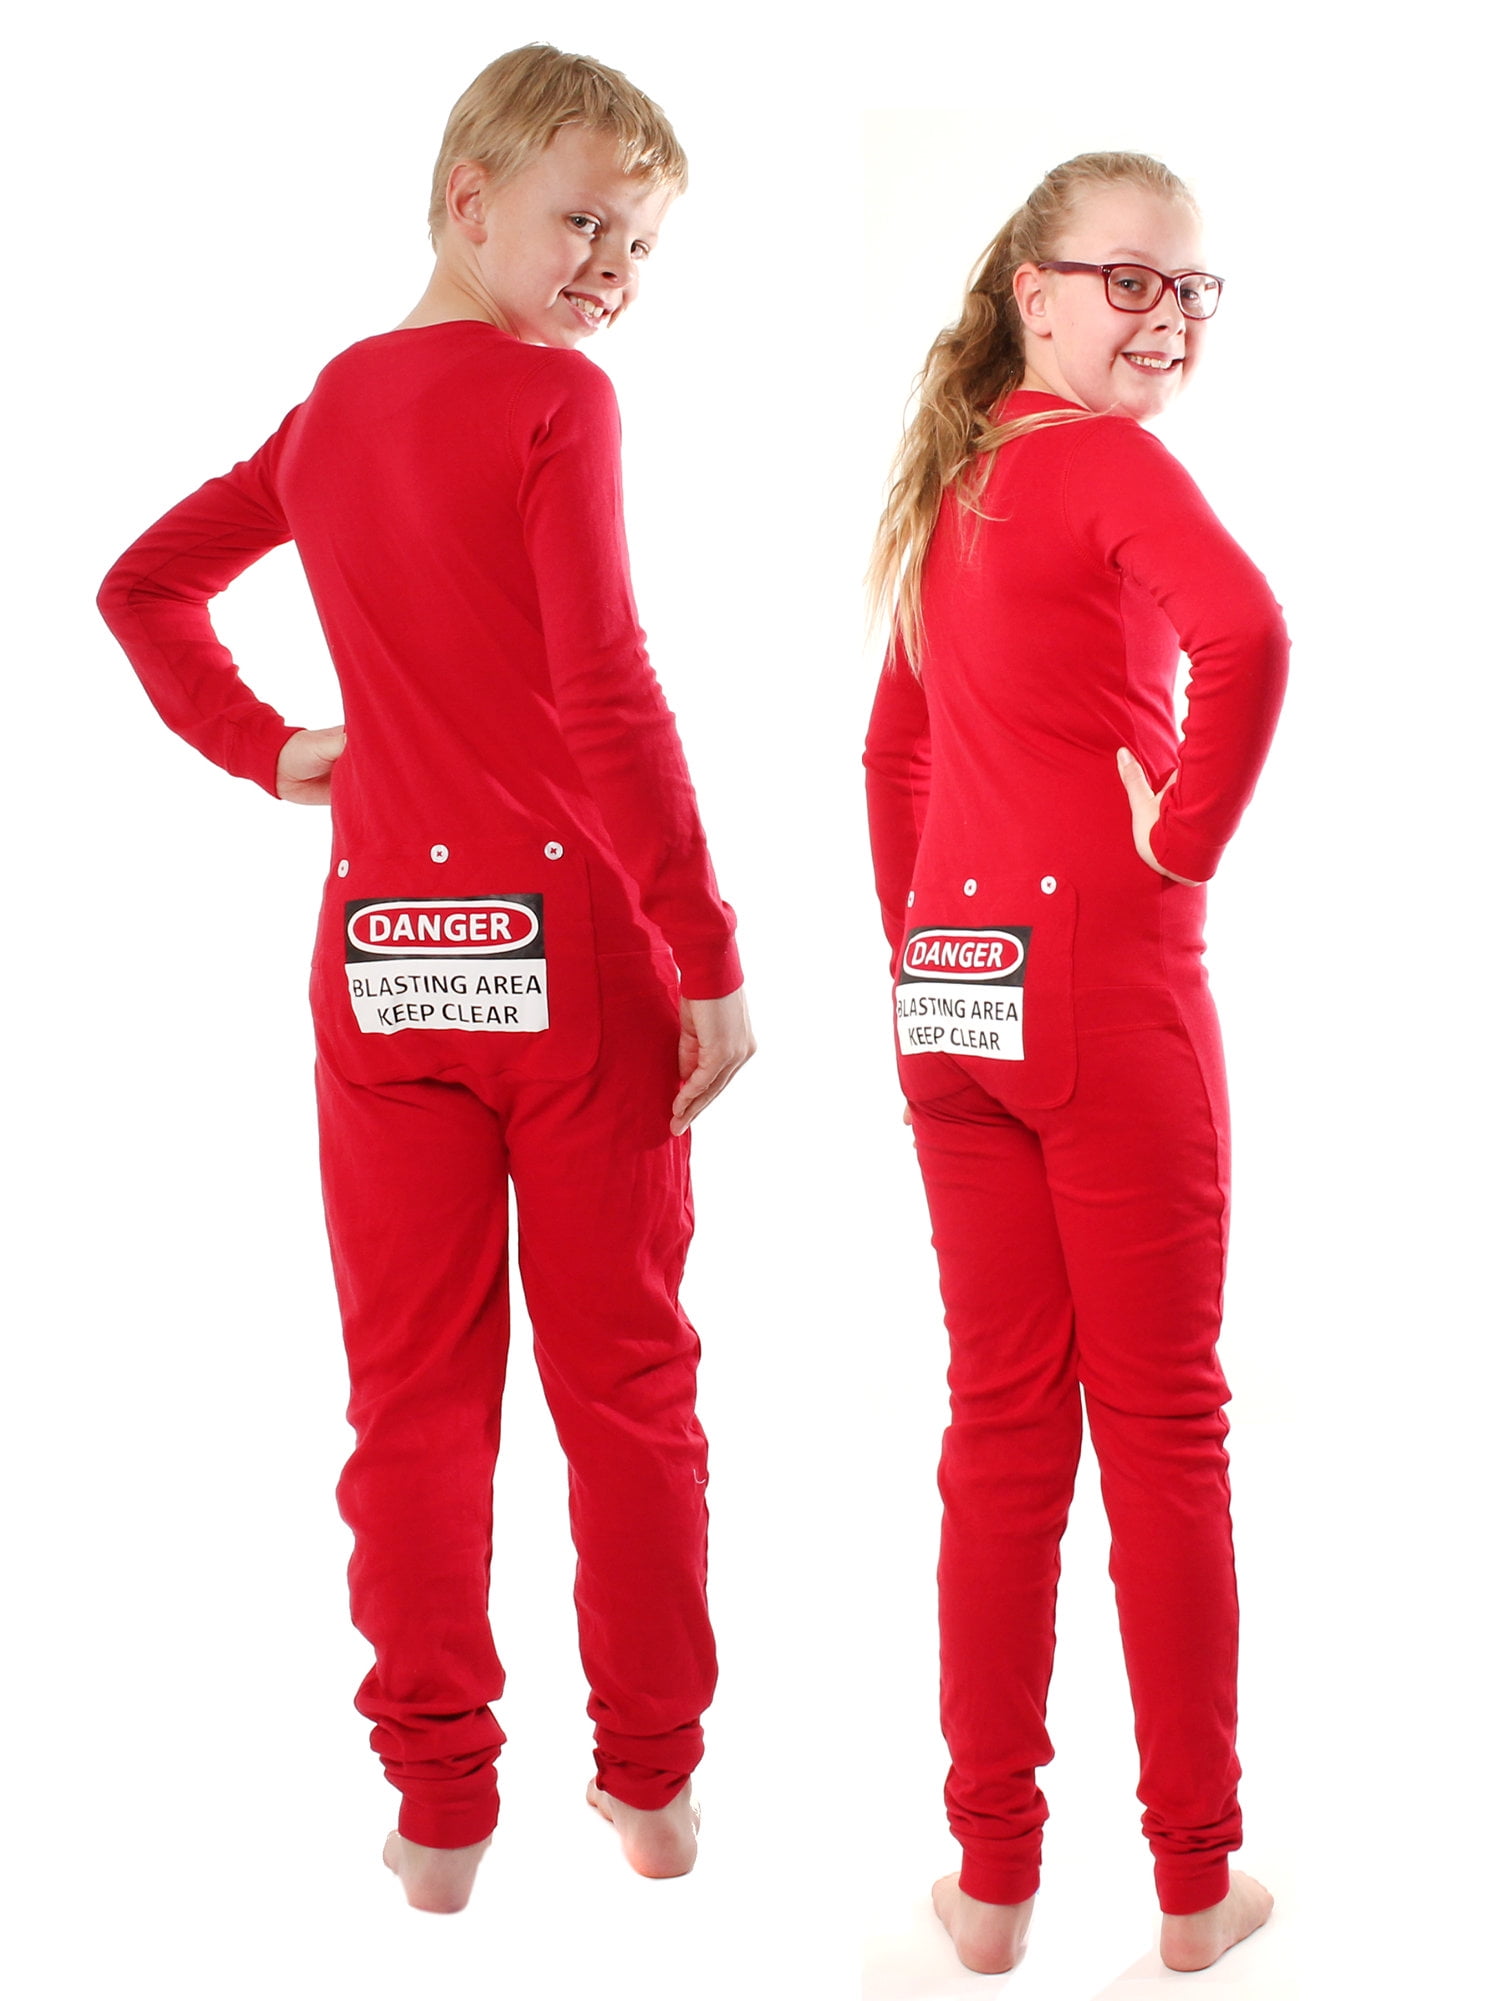 Big Feet Pajama - Red Union Suit Kids Pajamas DANGER BLAST AREA Sign on ...